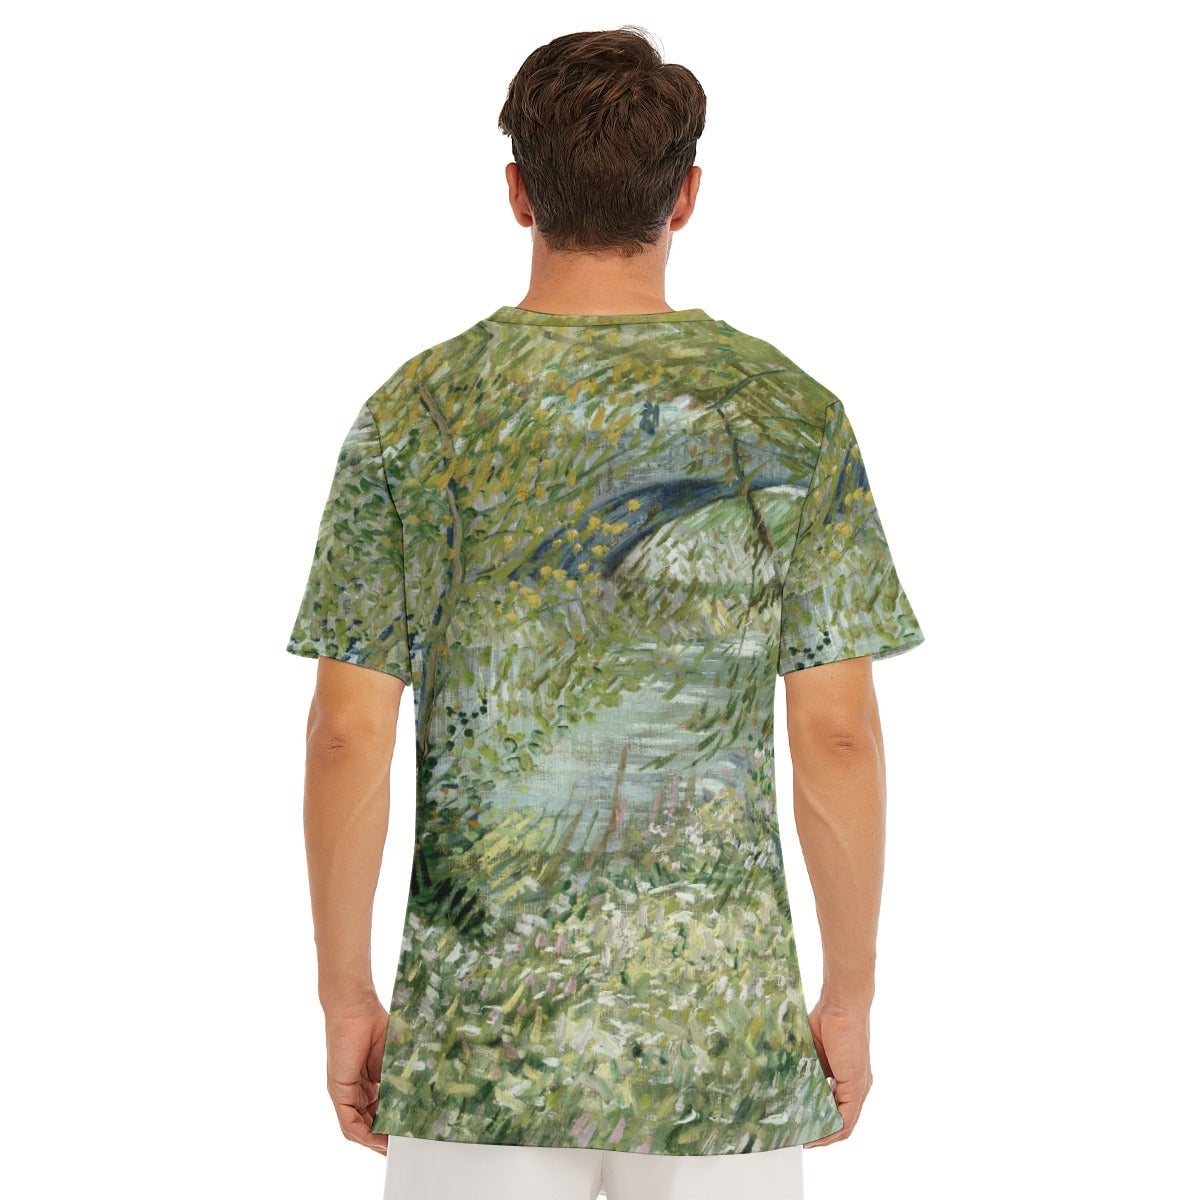 River Bank in Springtime by Vincent Van Gogh T-Shirt